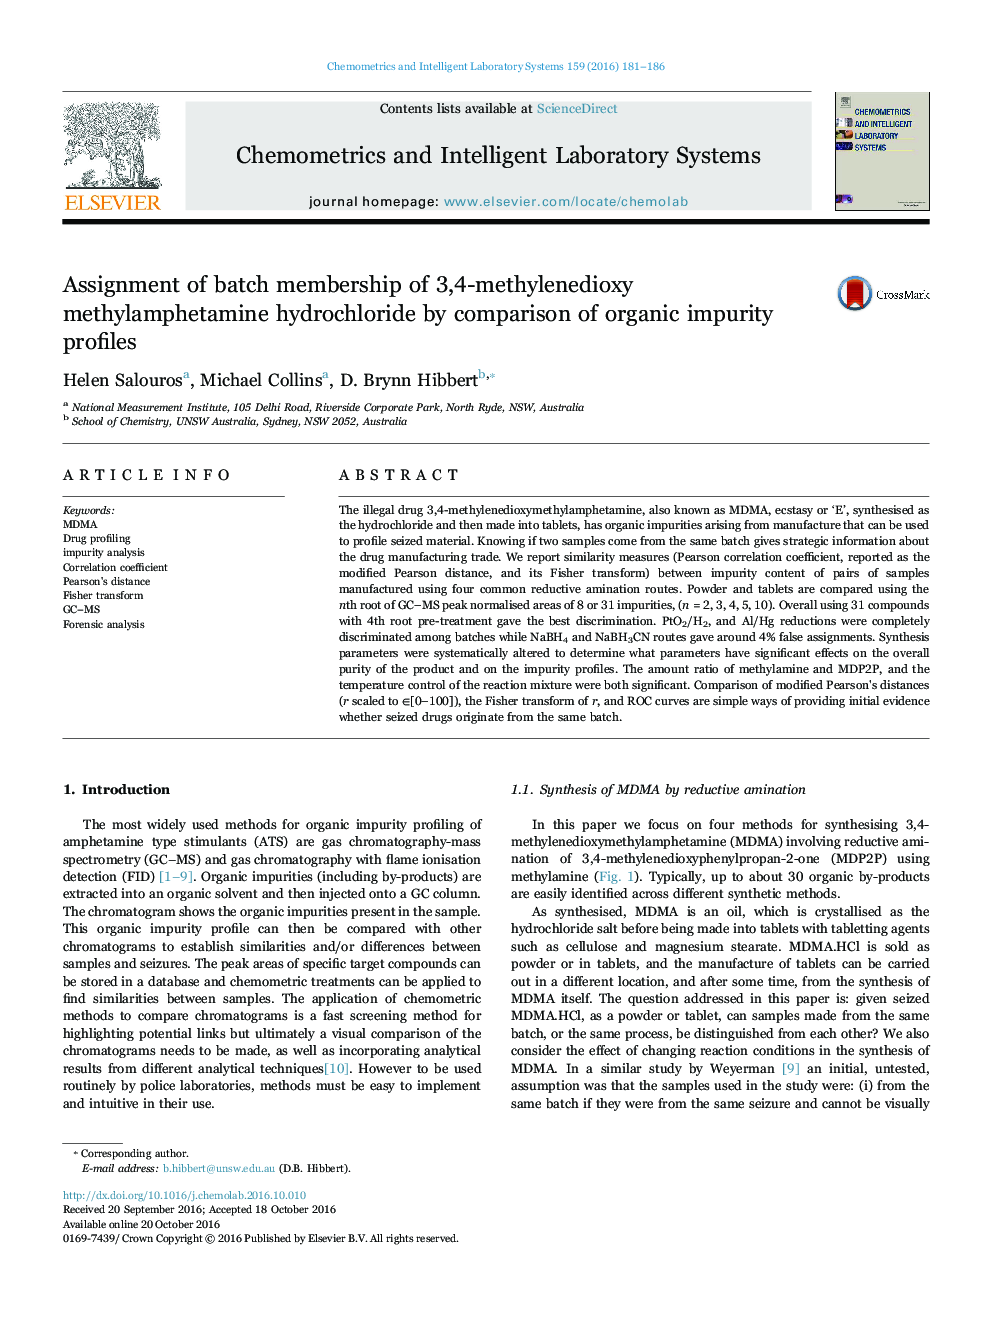 Assignment of batch membership of 3,4-methylenedioxy methylamphetamine hydrochloride by comparison of organic impurity profiles